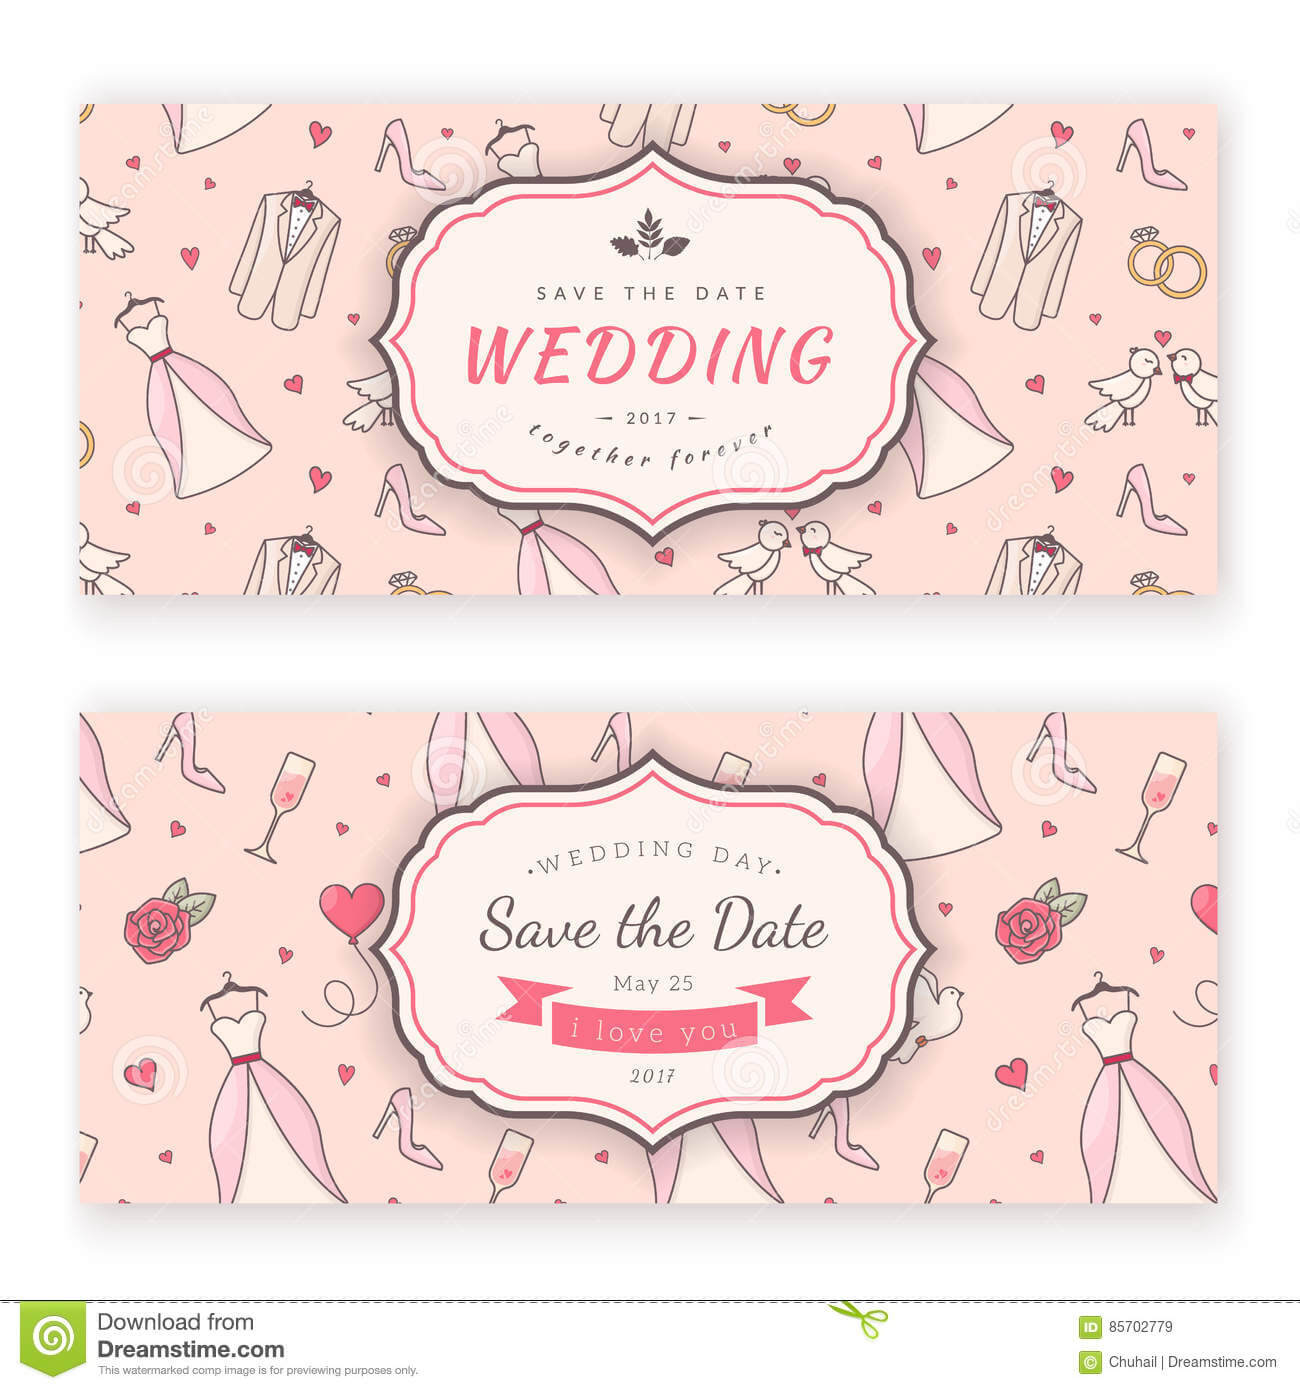 Wedding Banner Template. Stock Vector. Illustration Of With Wedding Banner Design Templates